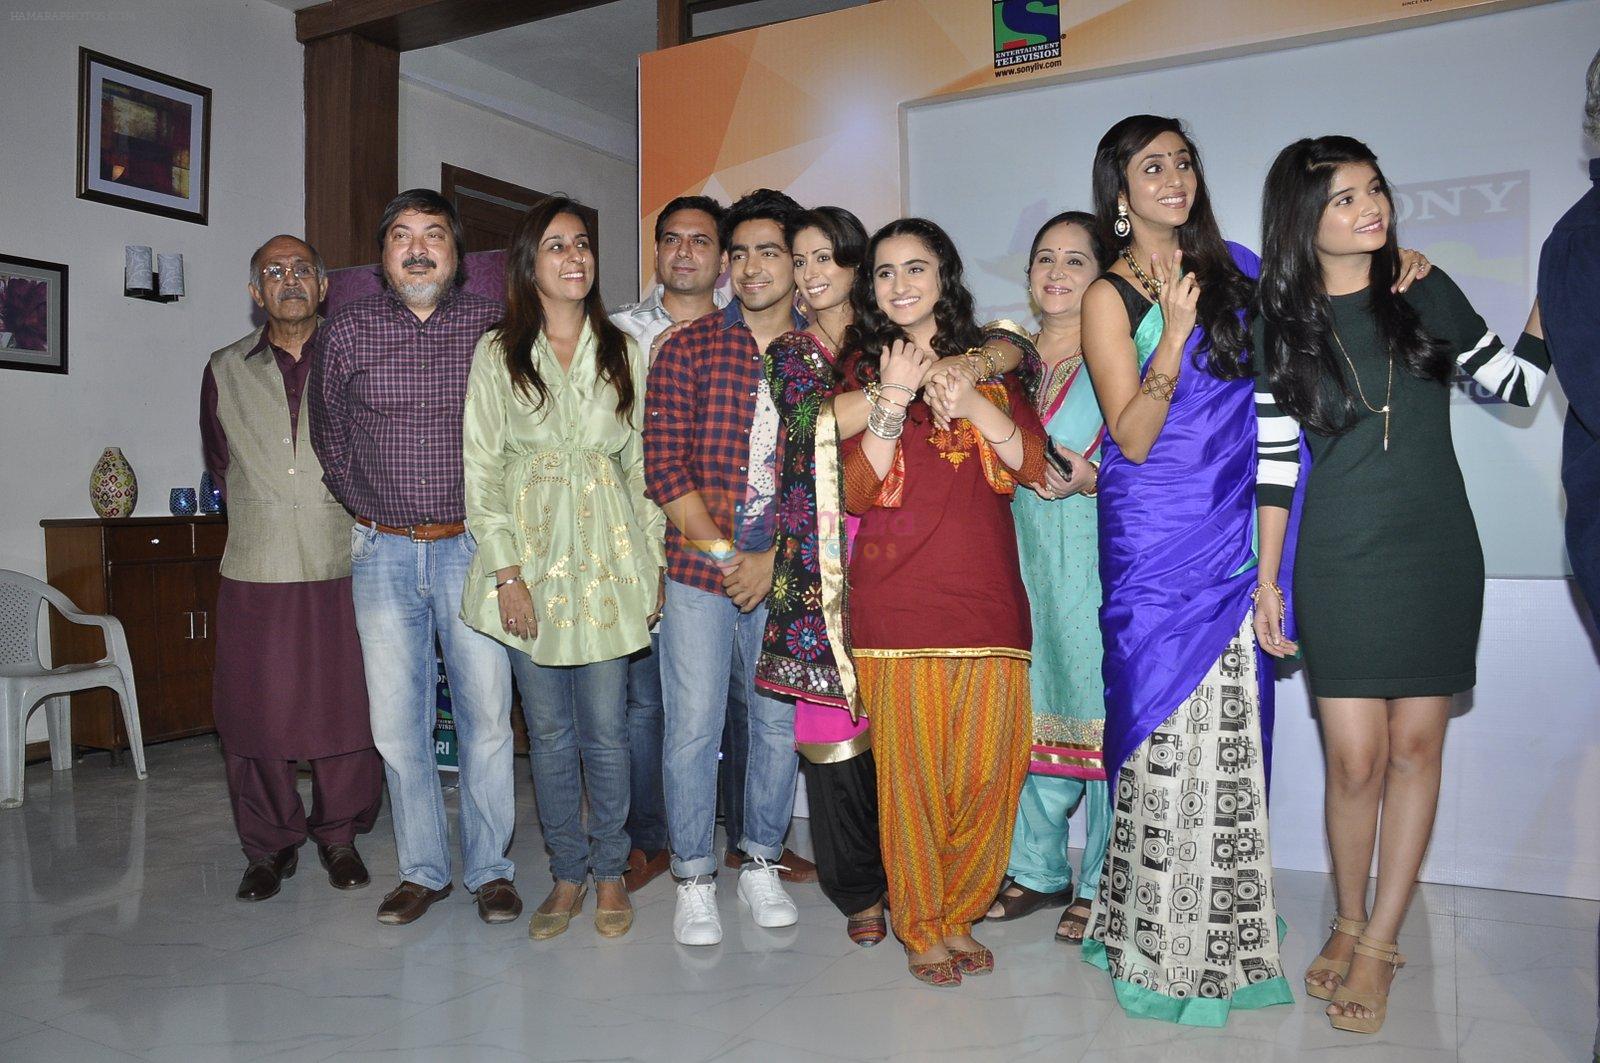 Gautami Kapoor, Sangita Ghosh, Tony Singh, Deeya Singh at Parvarish serial launch by Sony on 19th Nov 2015